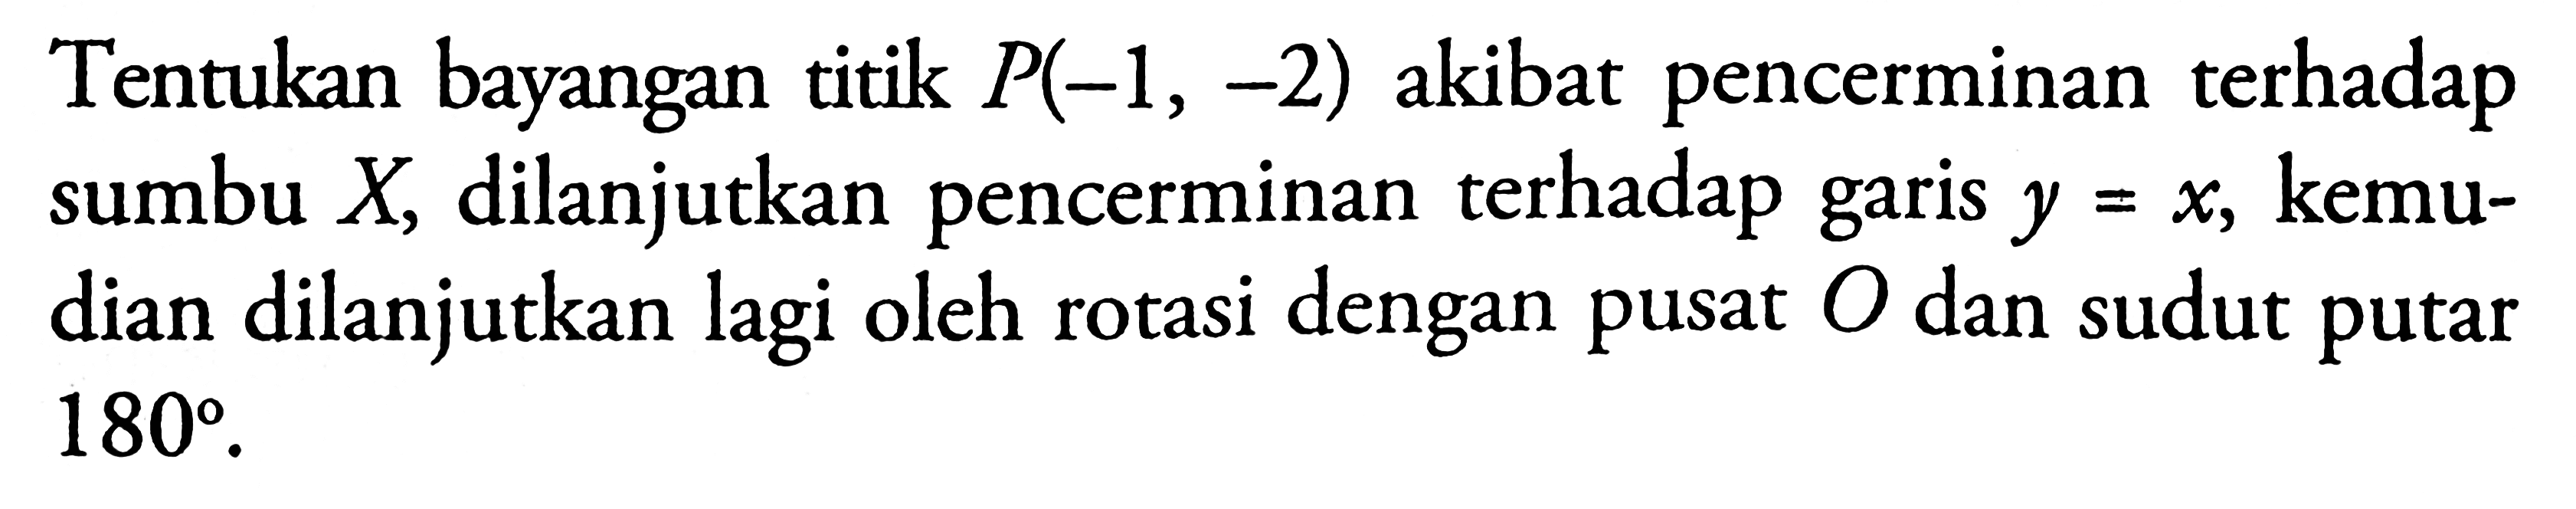 Tentukan bayangan titik P(-1, -2) akibat pencerminan terhadap sumbu X, dilanjutkan pencerminan terhadap garis y=x, kemudian dilanjutkan lagi oleh rotasi dengan pusat O dan sudut putar 180.